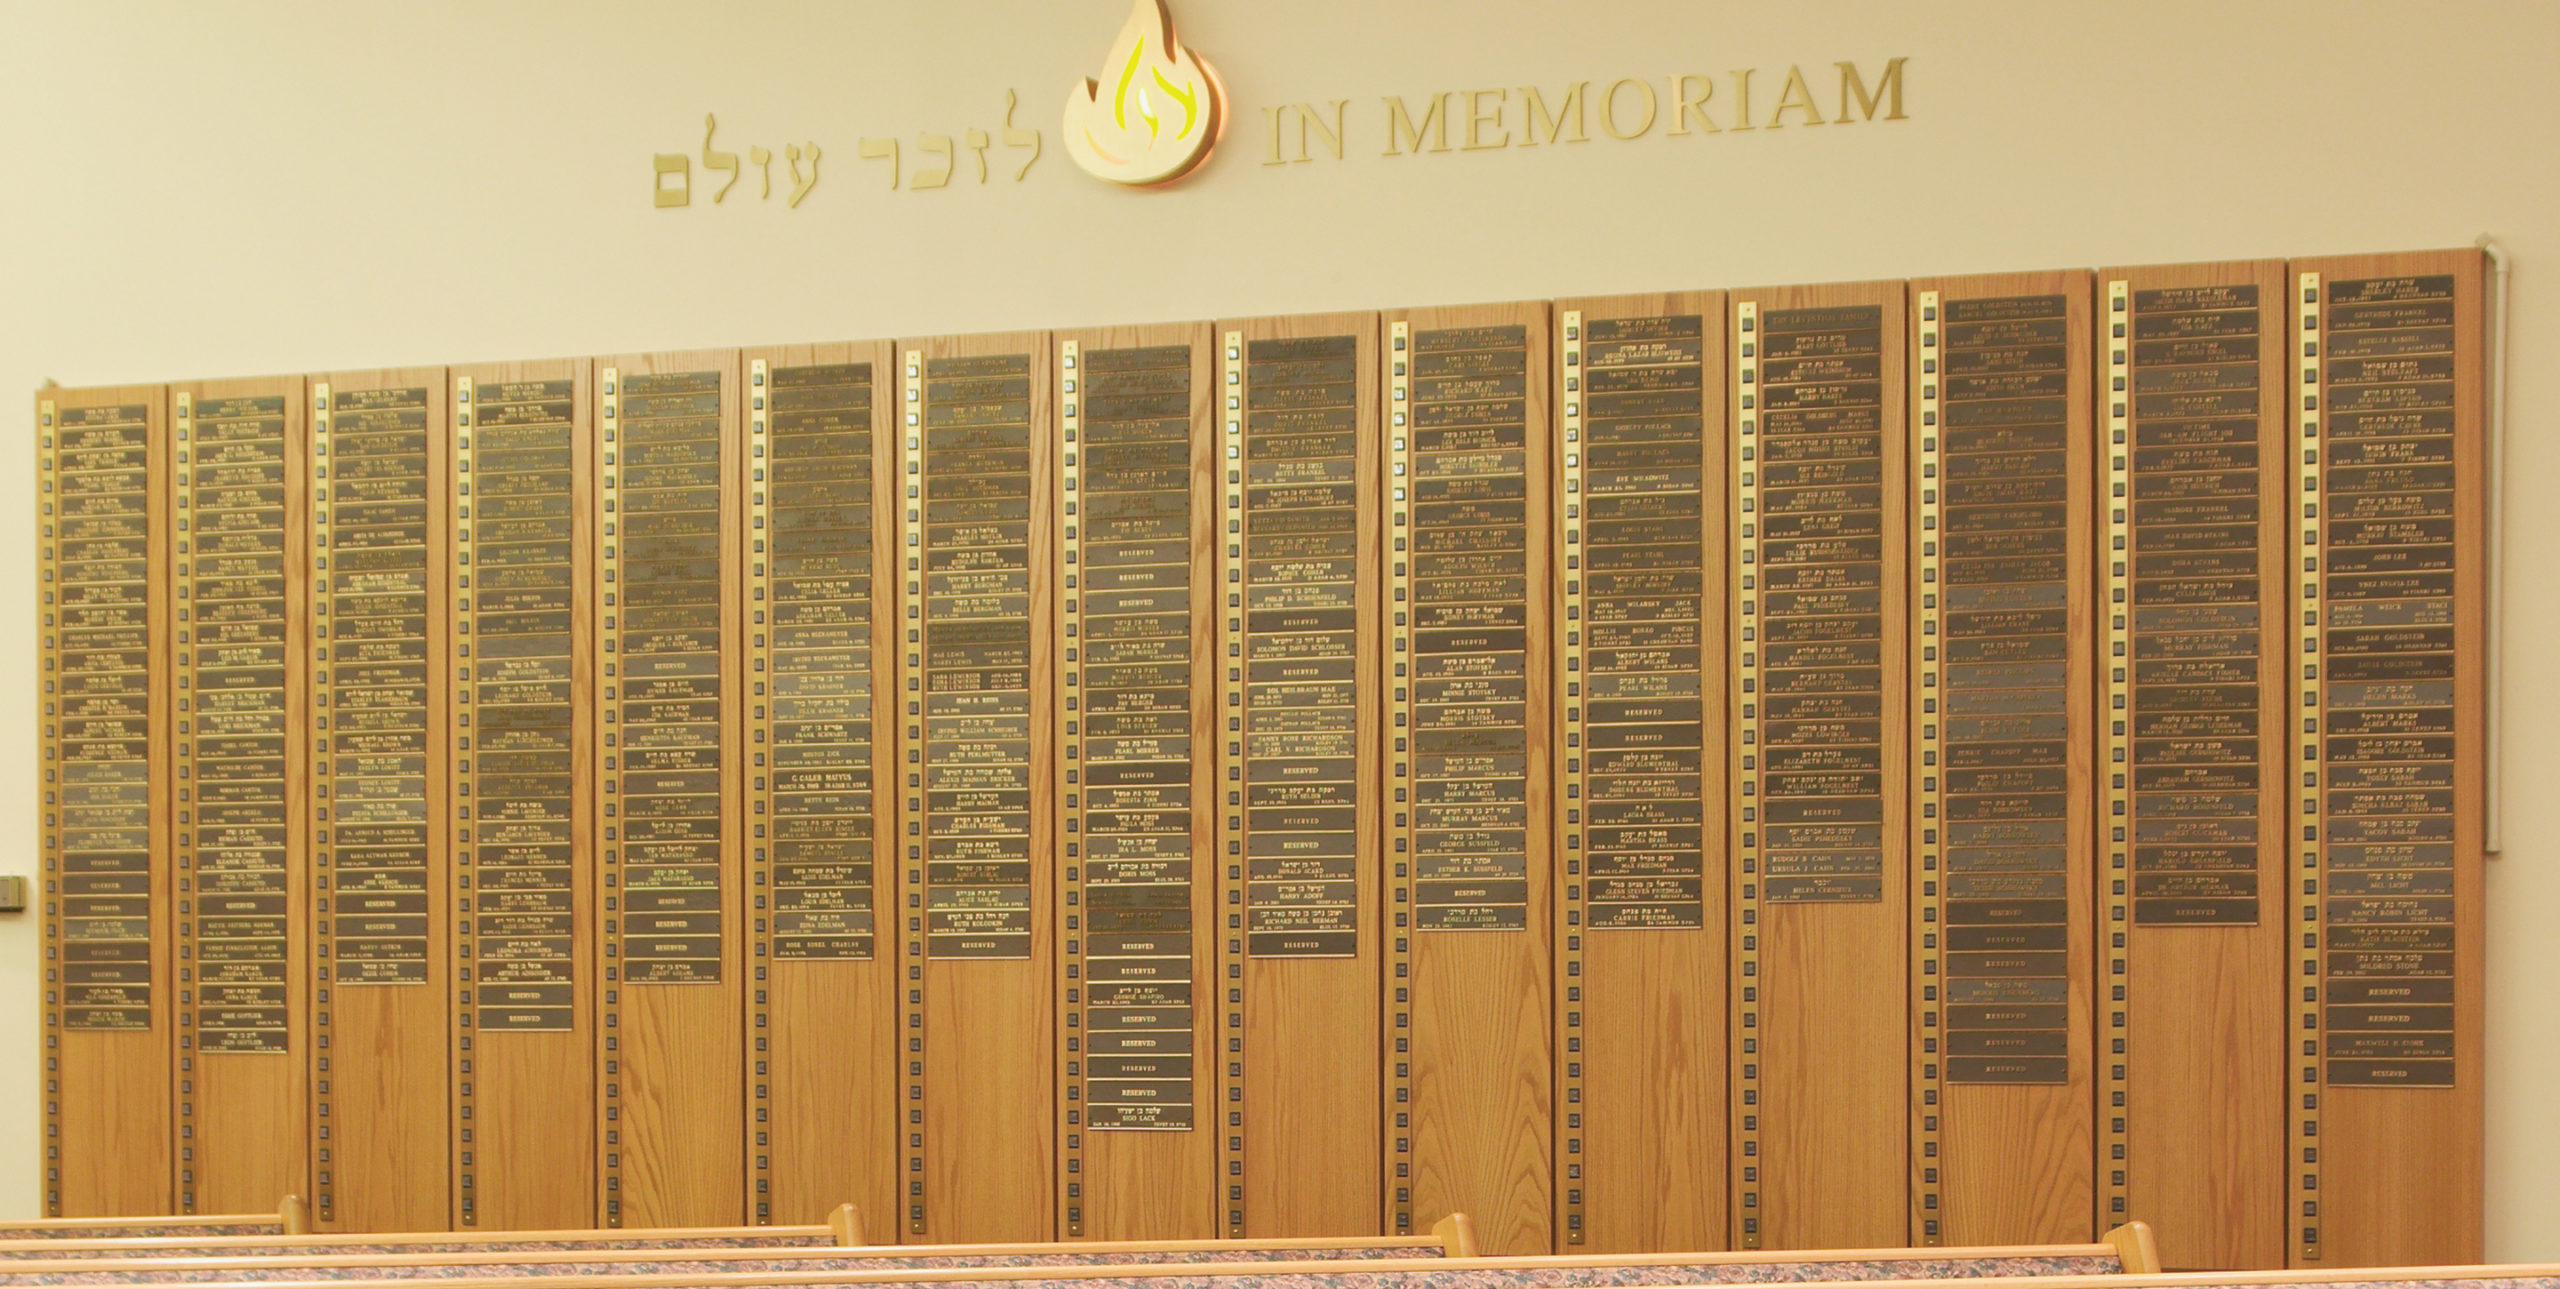 B'nai Israel Reform Temple in Oakdale in Memoriam wall